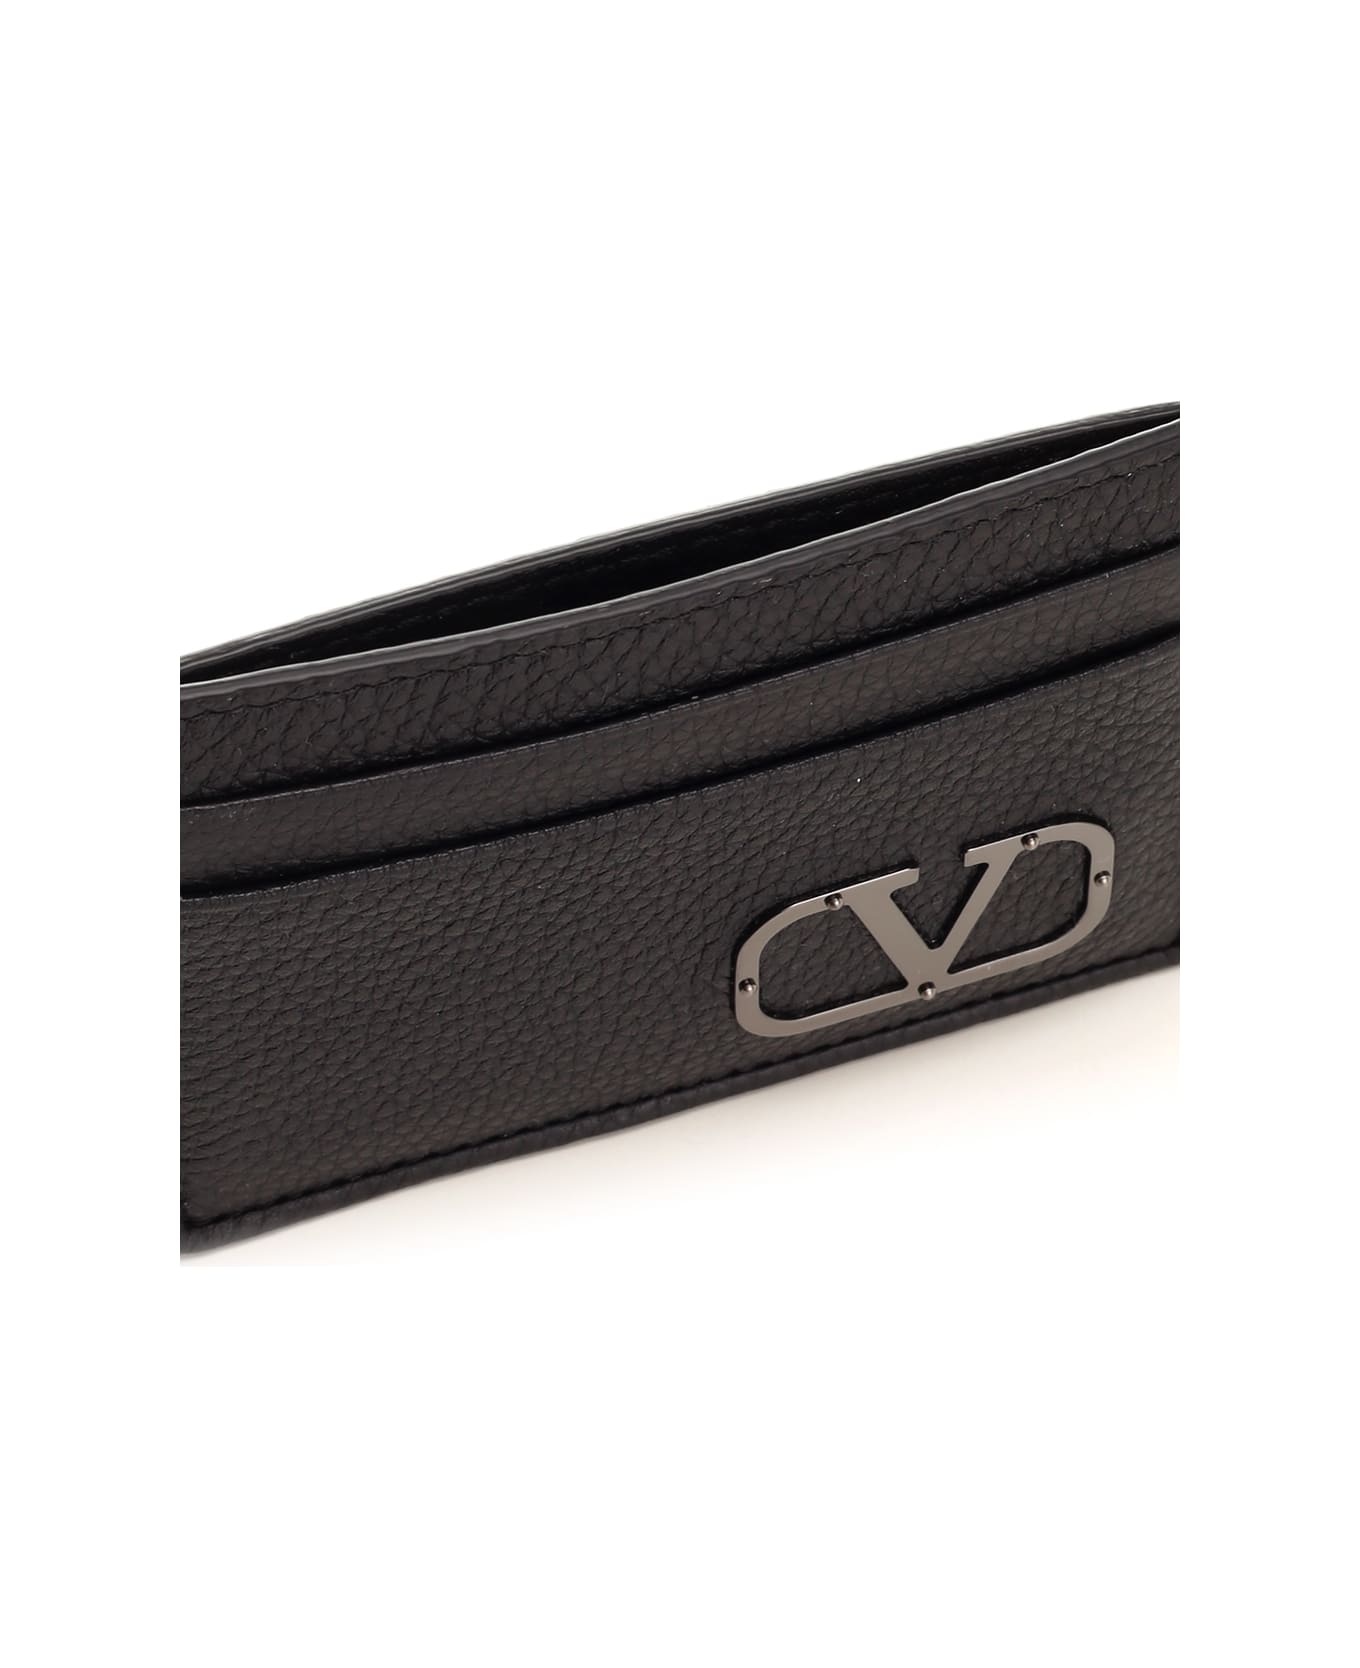 Valentino Garavani Leather Card Holder - Black